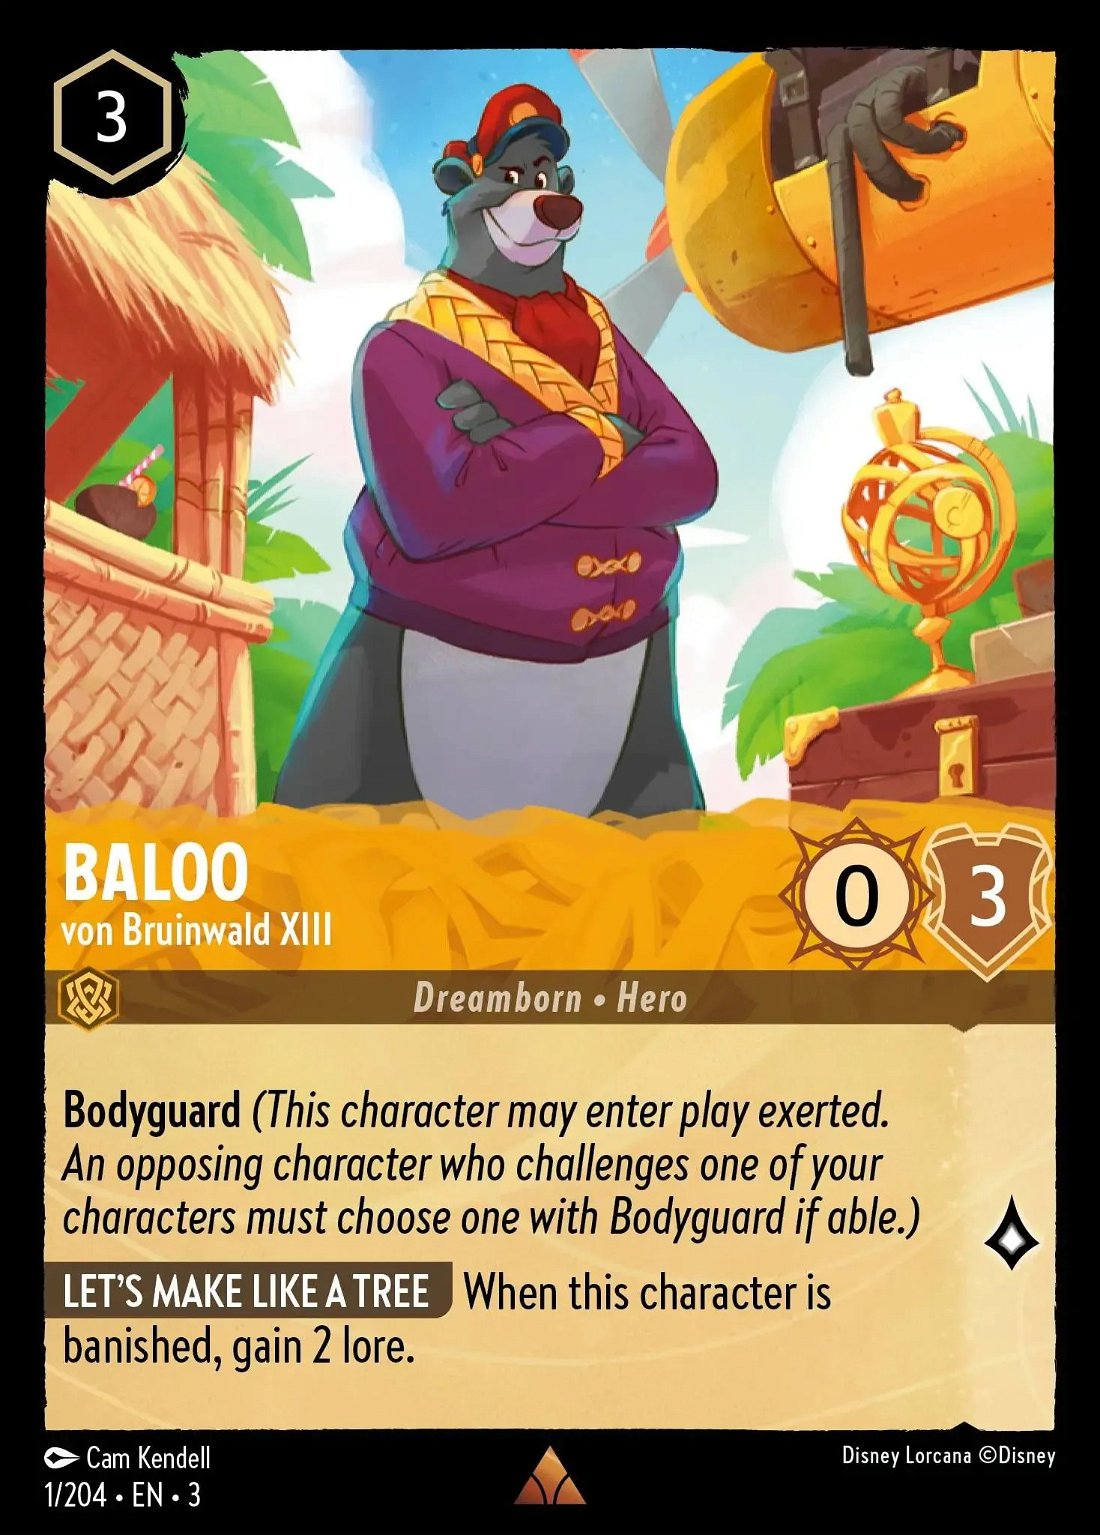 Baloo - von Bruinwald XIII Crop image Wallpaper